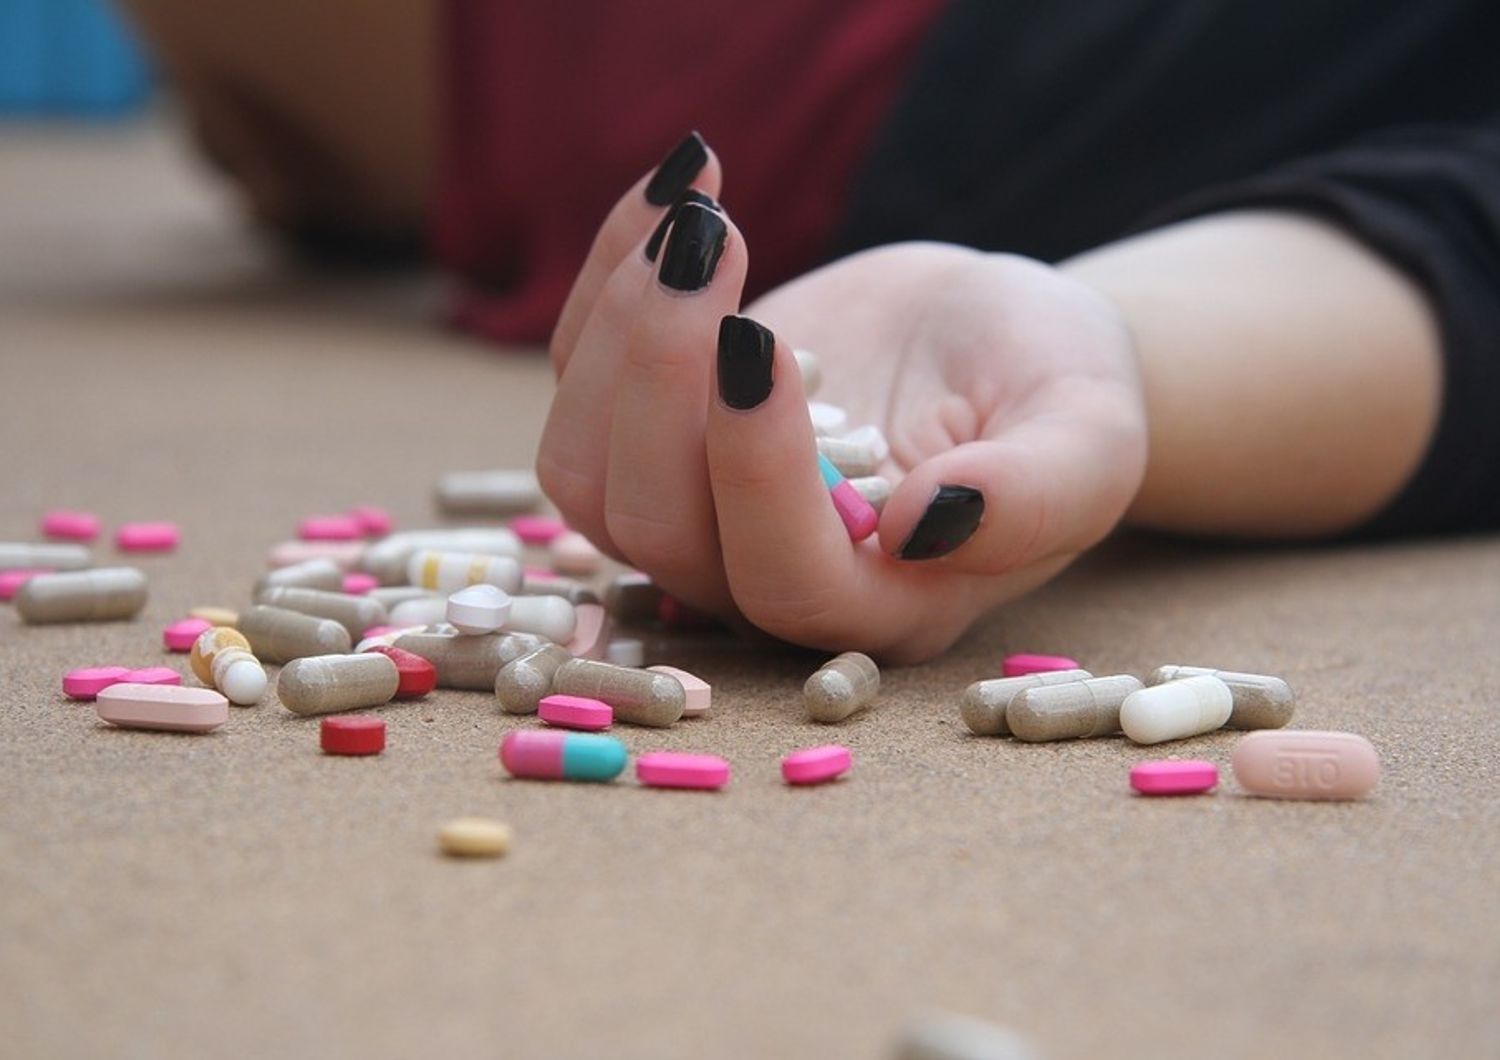 &nbsp;suicidio mix farmaci (foto pixabay)